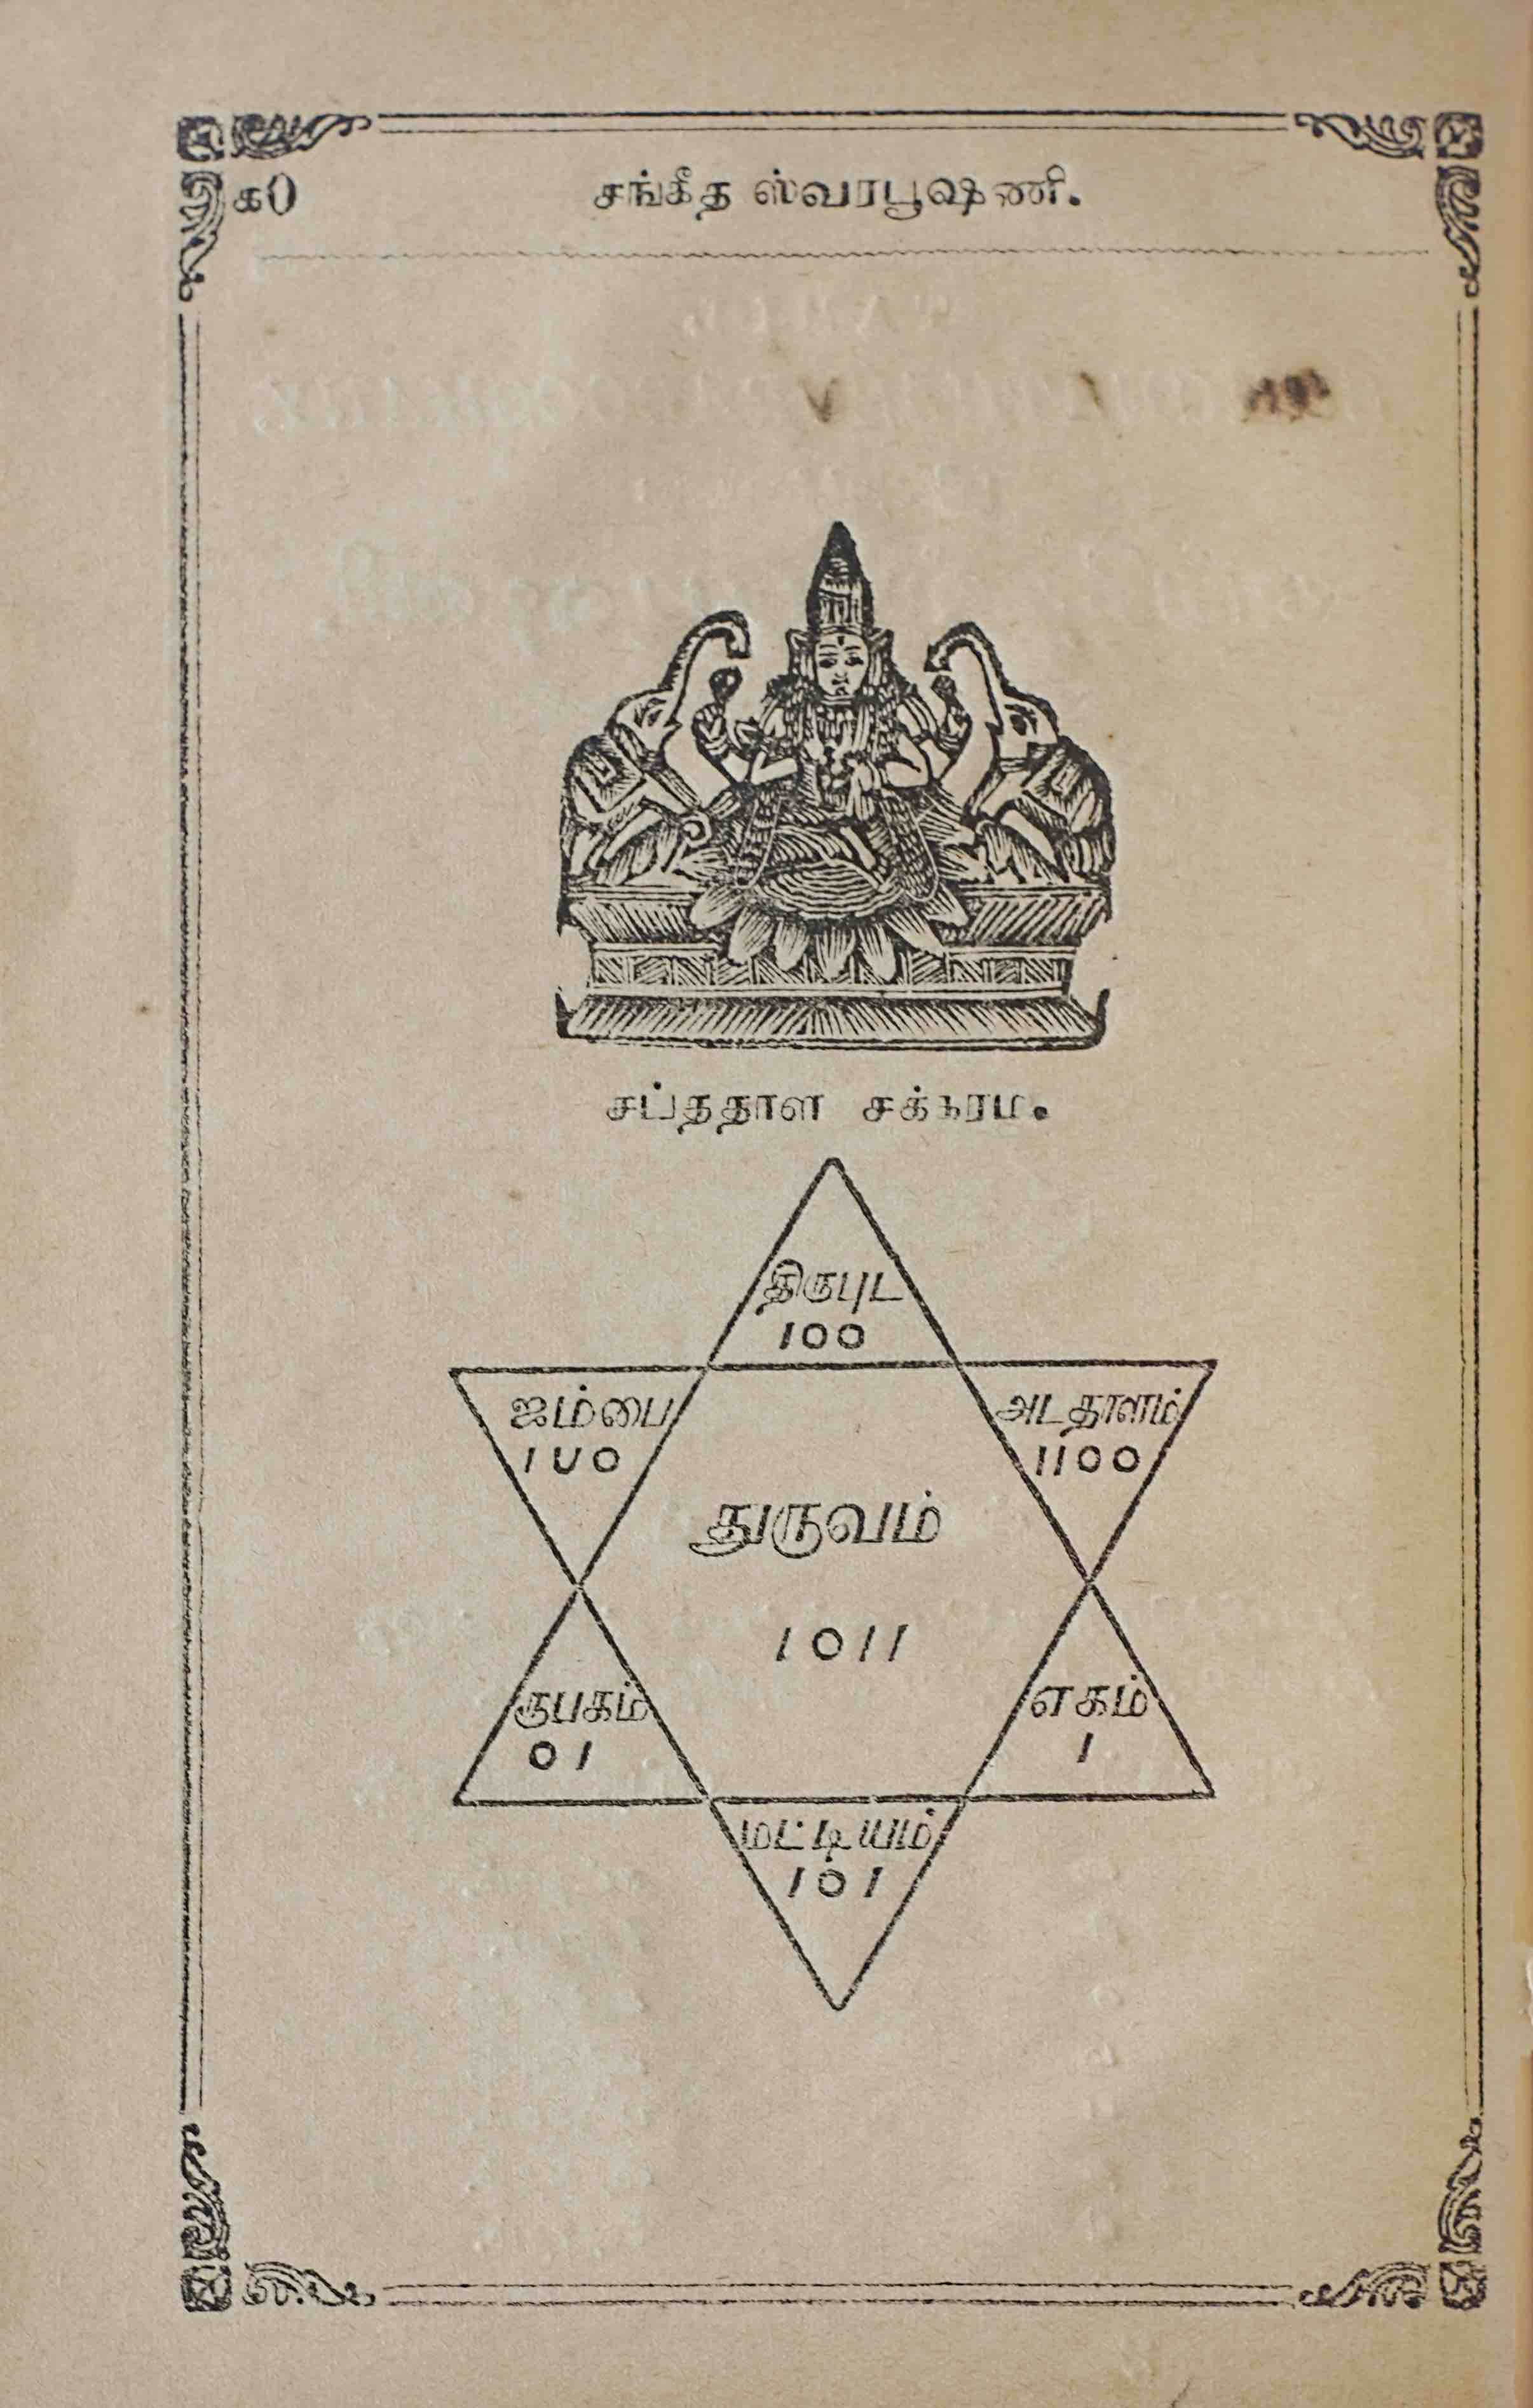 NARAYANASAWMT MOODELIAR: - [HINDU MUSIC]. Tami'l. Sungeathasurabooshany. (Sangeet Swarabhushani). Chennai (Madras), J. Vilasam Press, 1908.